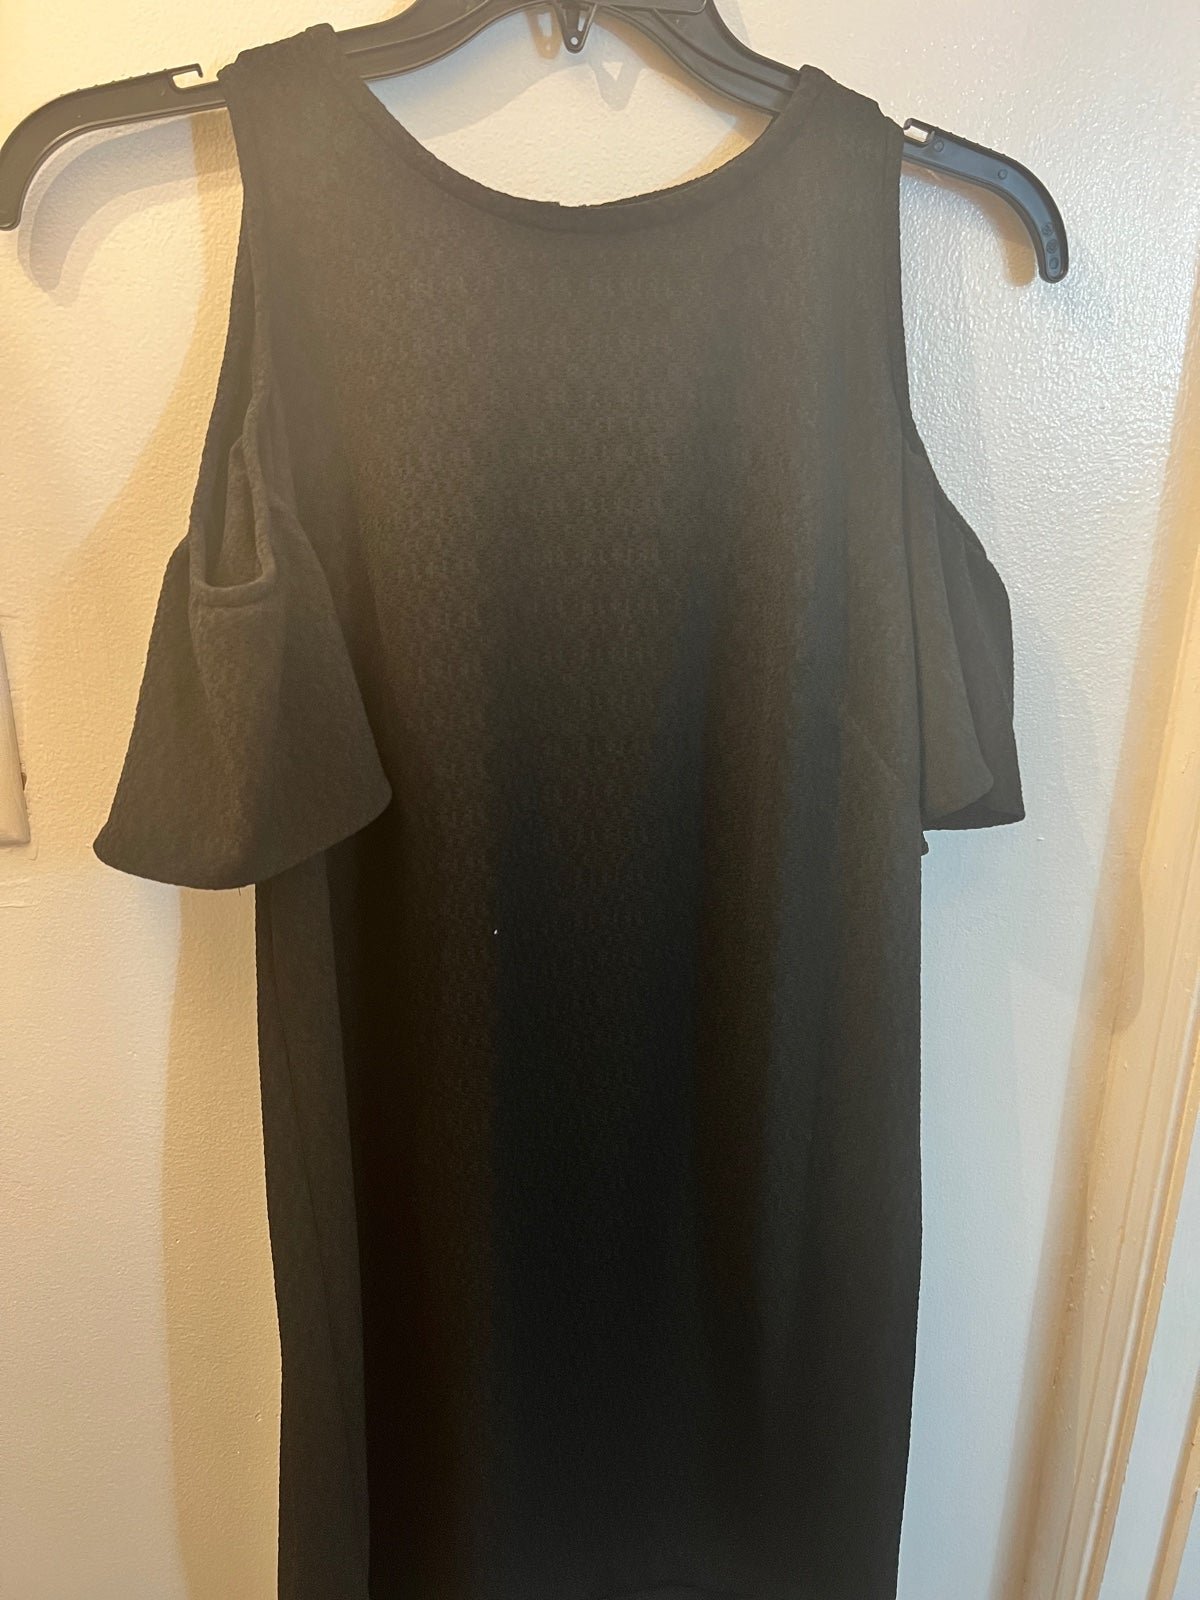 Cheap LOFT dress nnU4o1Yx9 New Style